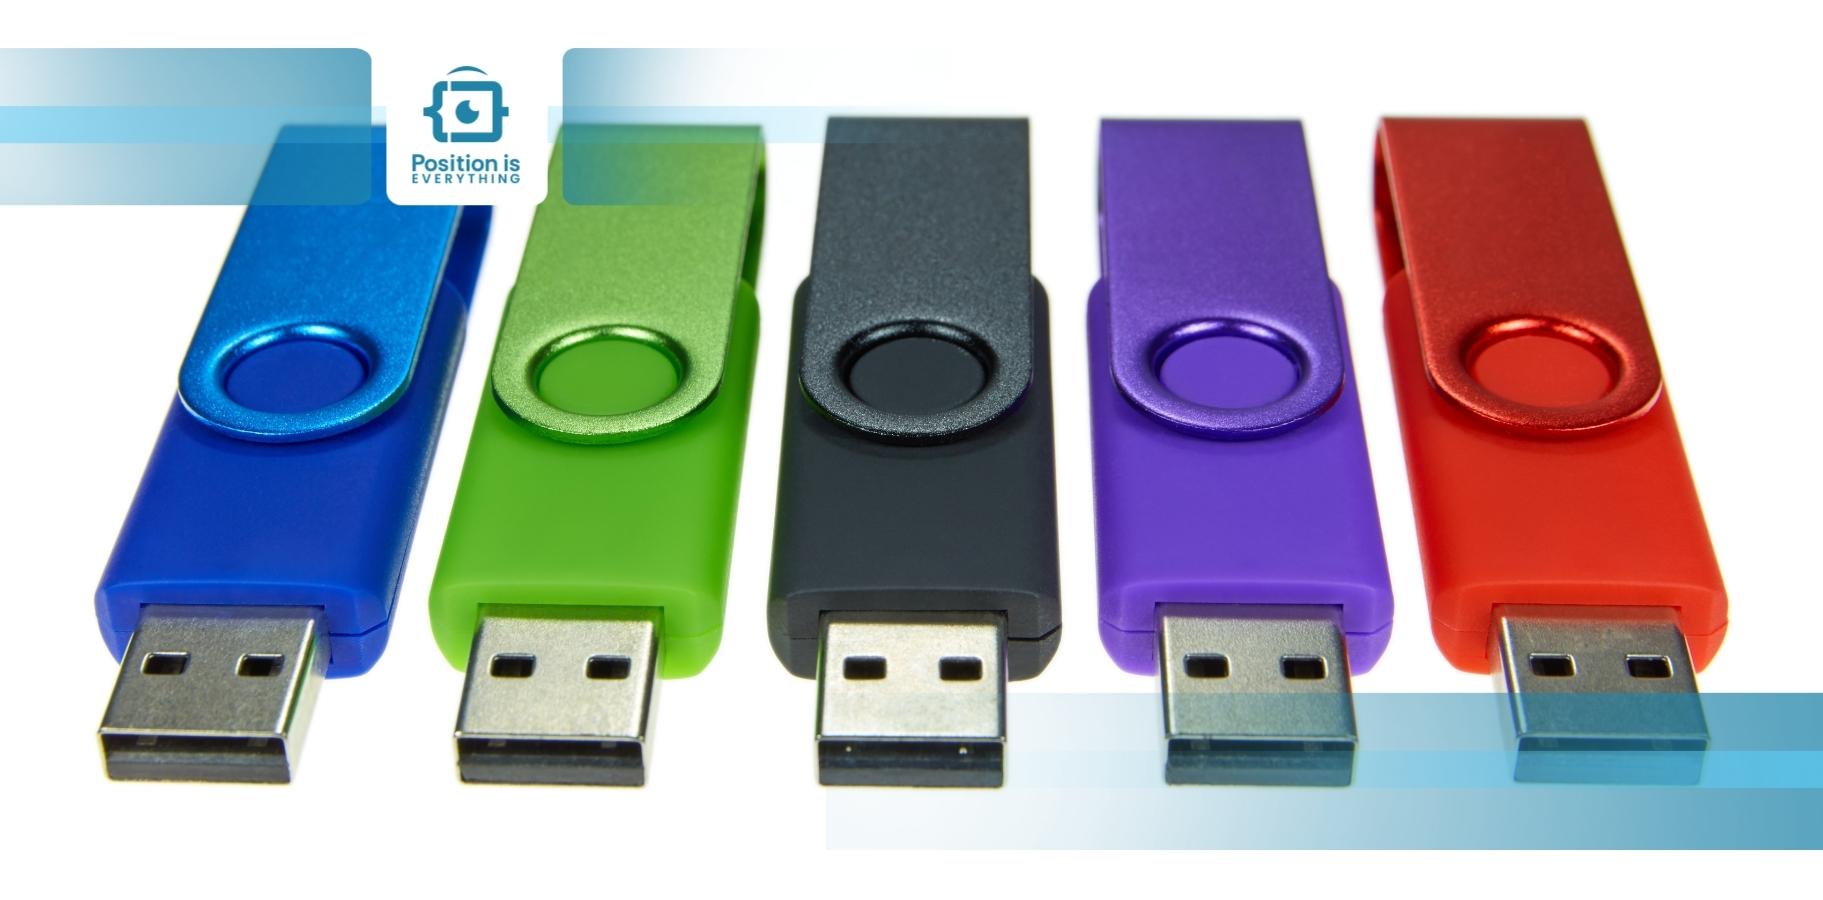 Цвета USB. USB порт цвета. Юсб 2.0 цвет. Какого цвета USB мощнее.